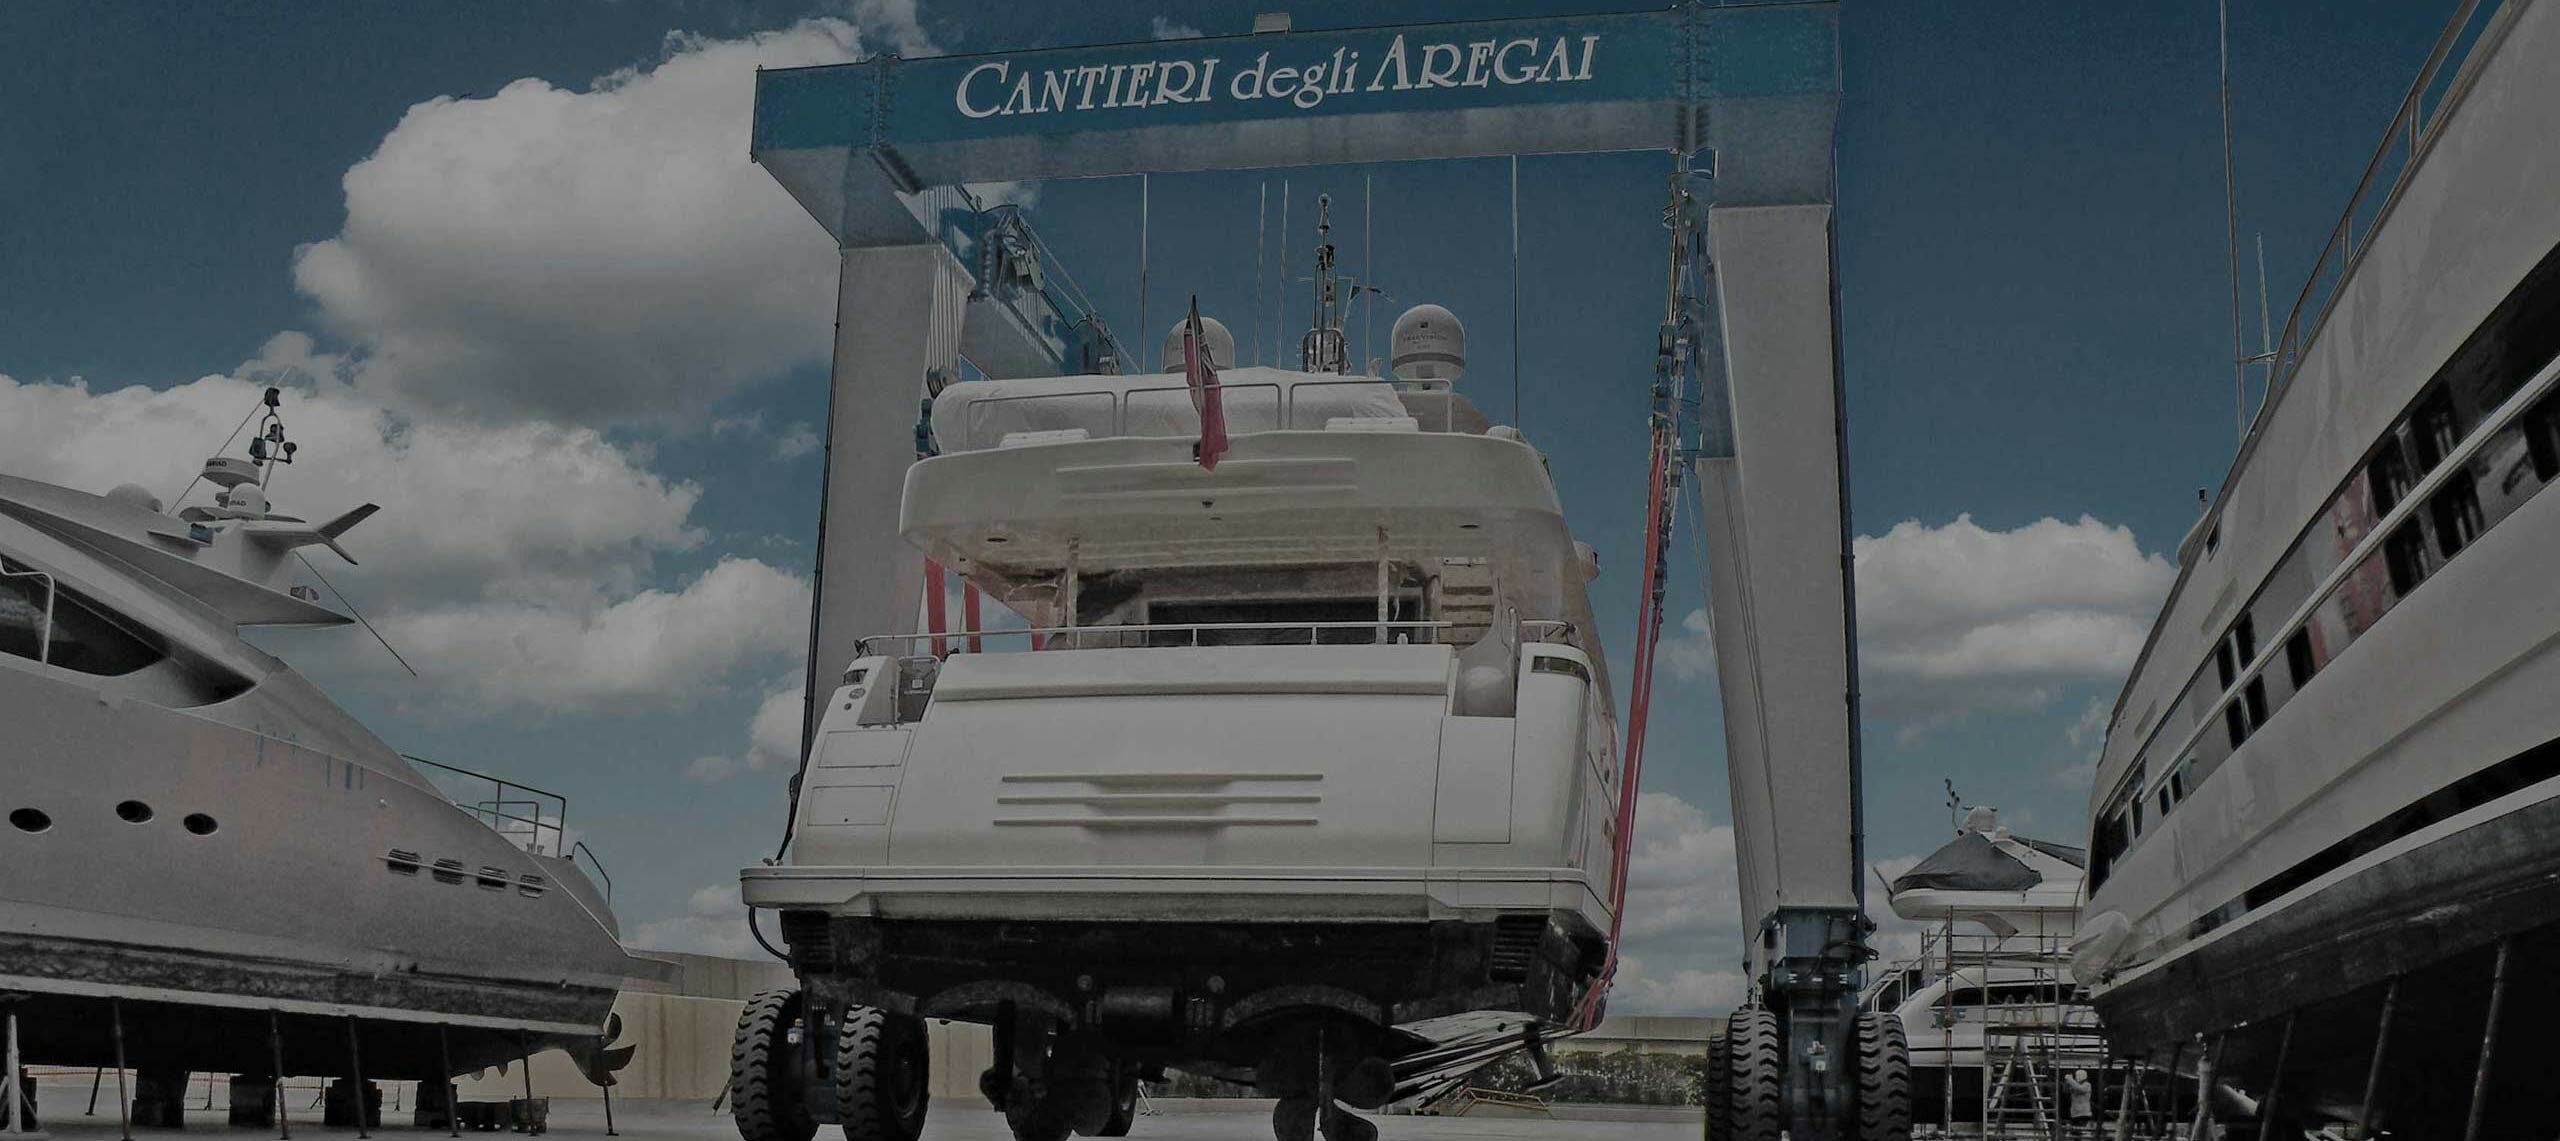 Our Shipyard – Cantieri degli Aregai